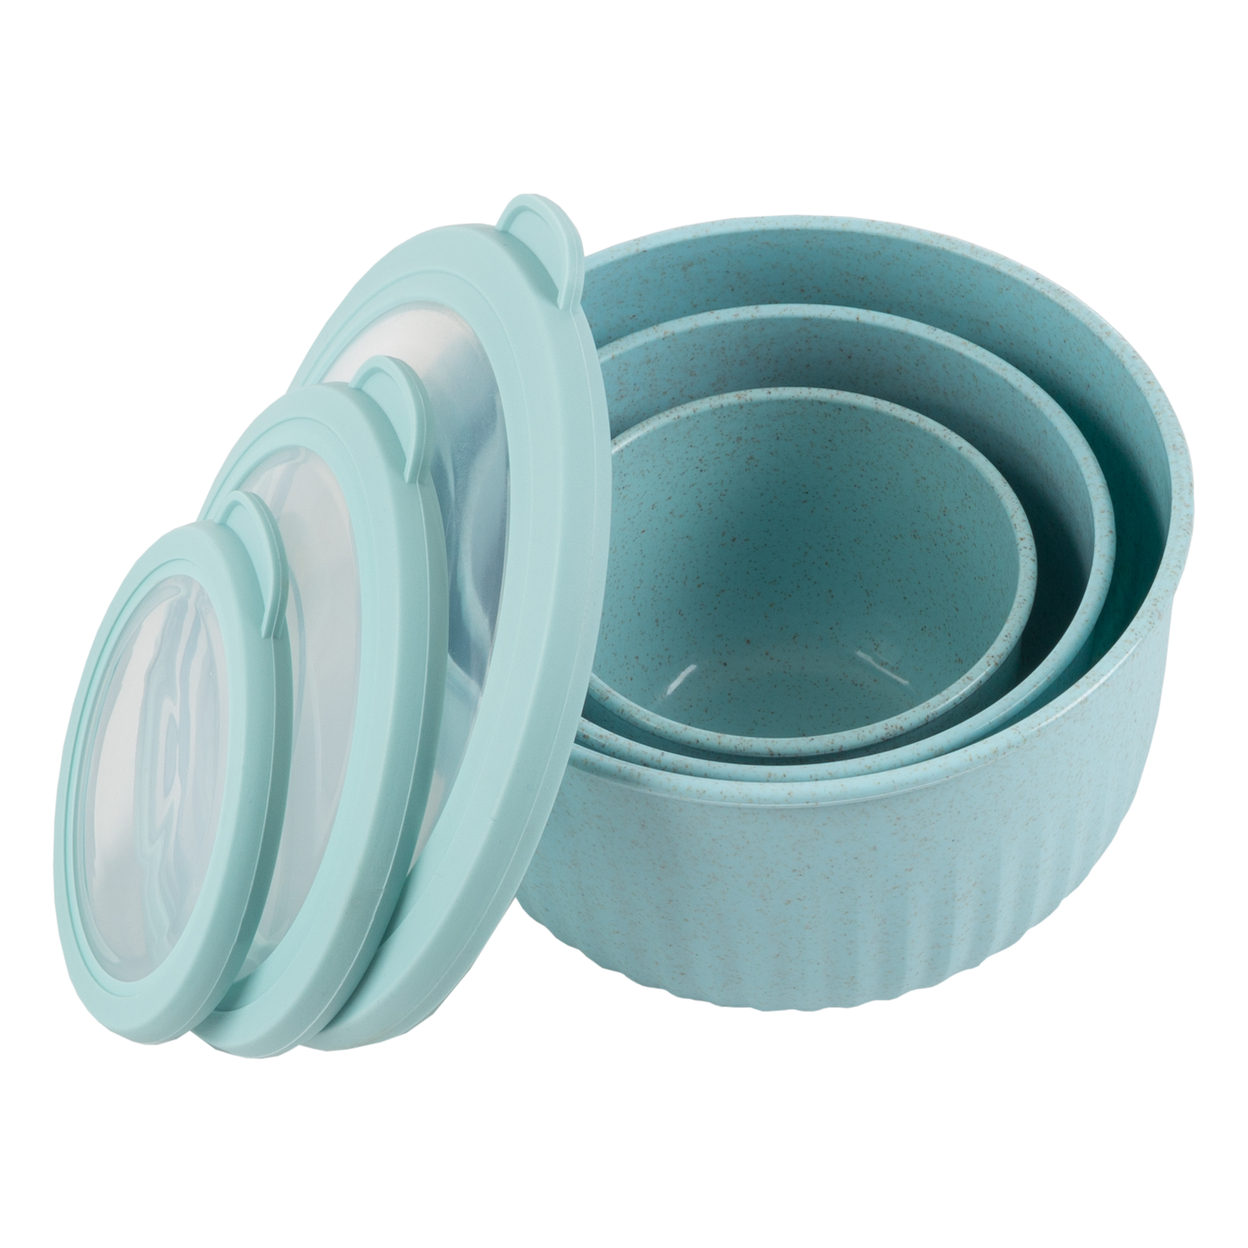 3 Teal Food Storage Nesting Bowls With Lids Freezer Microwave Safe